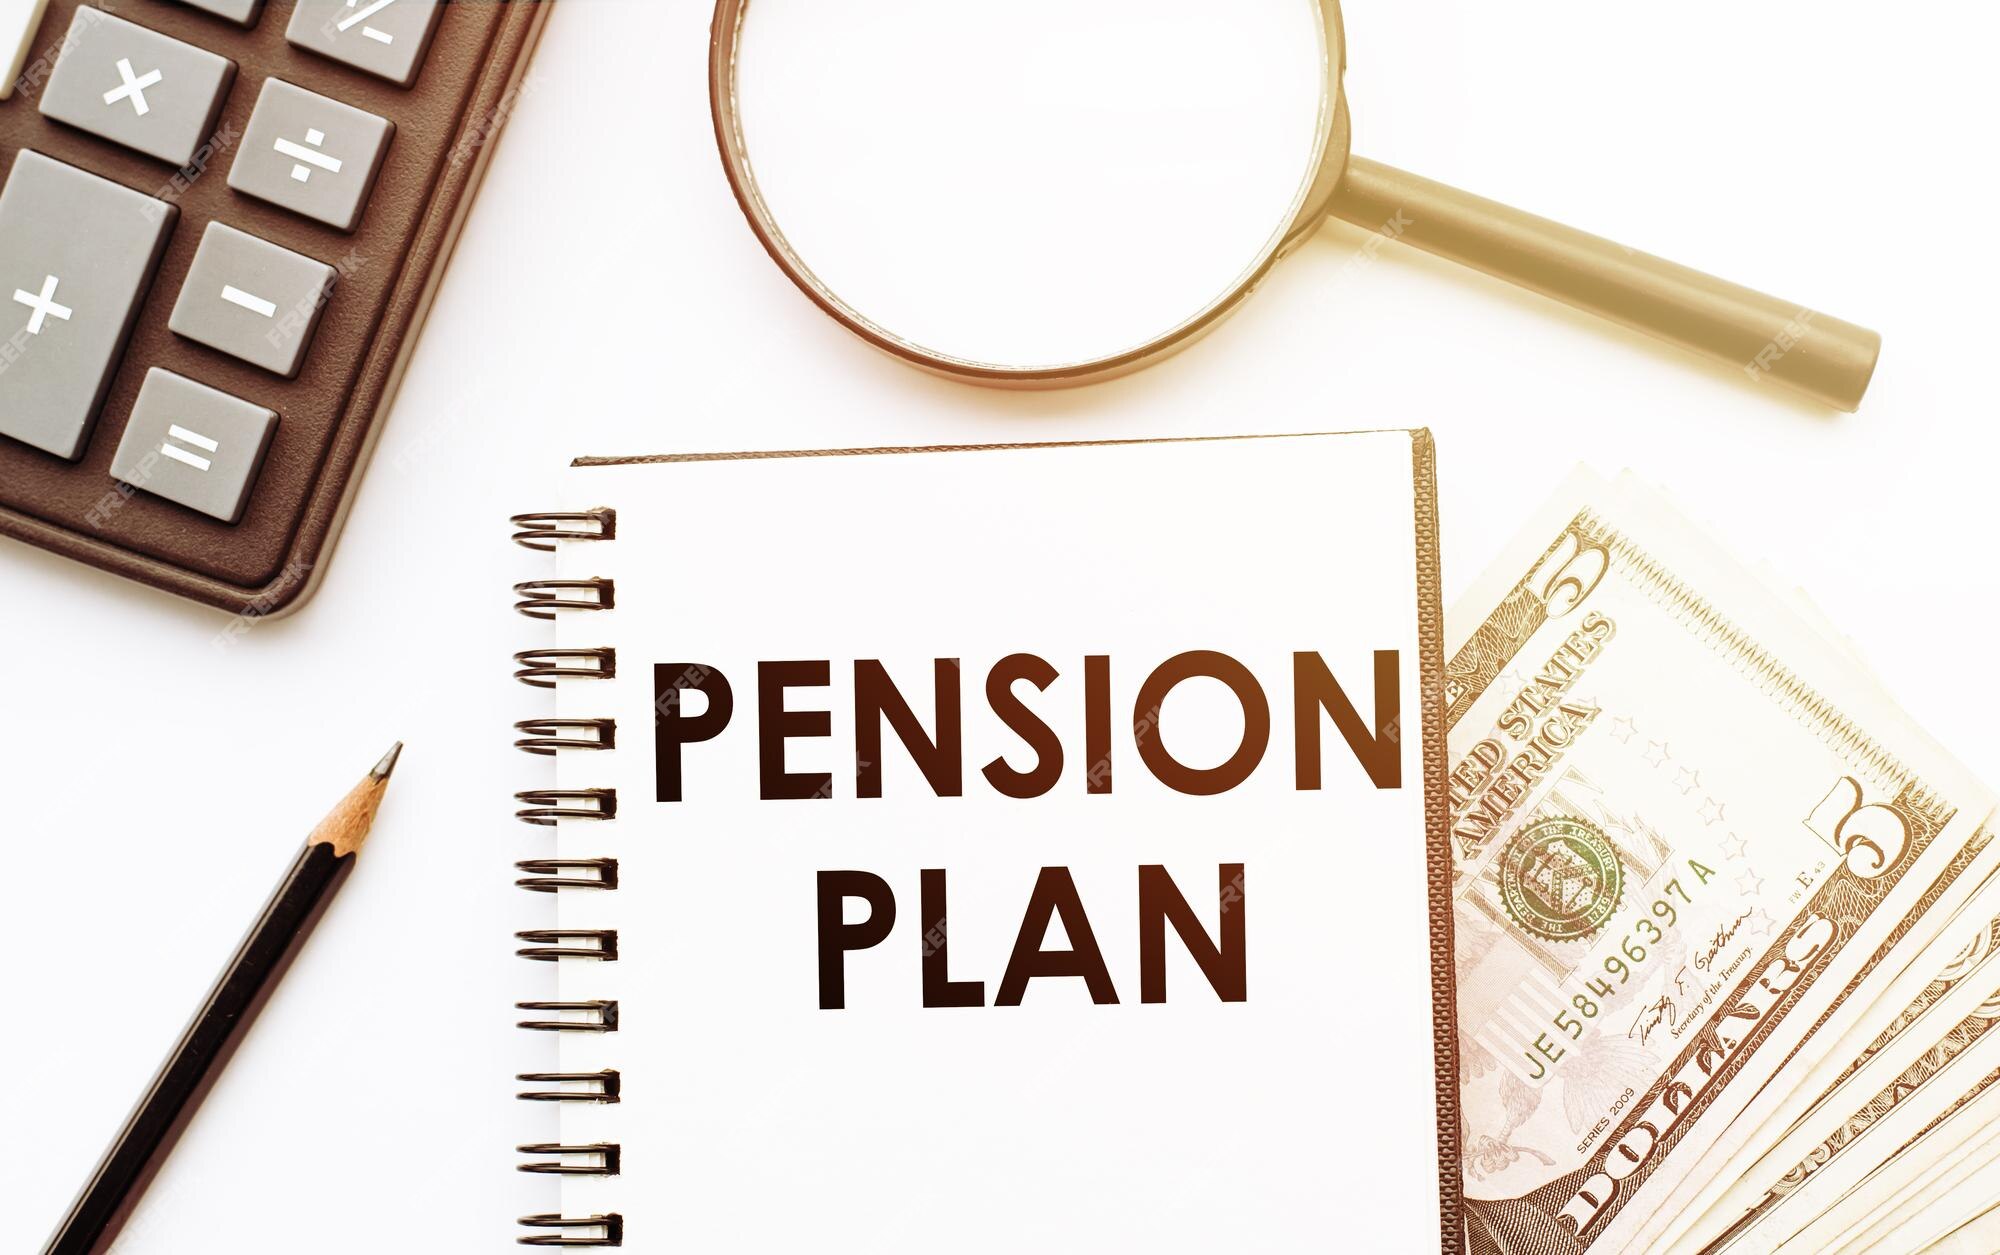 Company Pension Plan